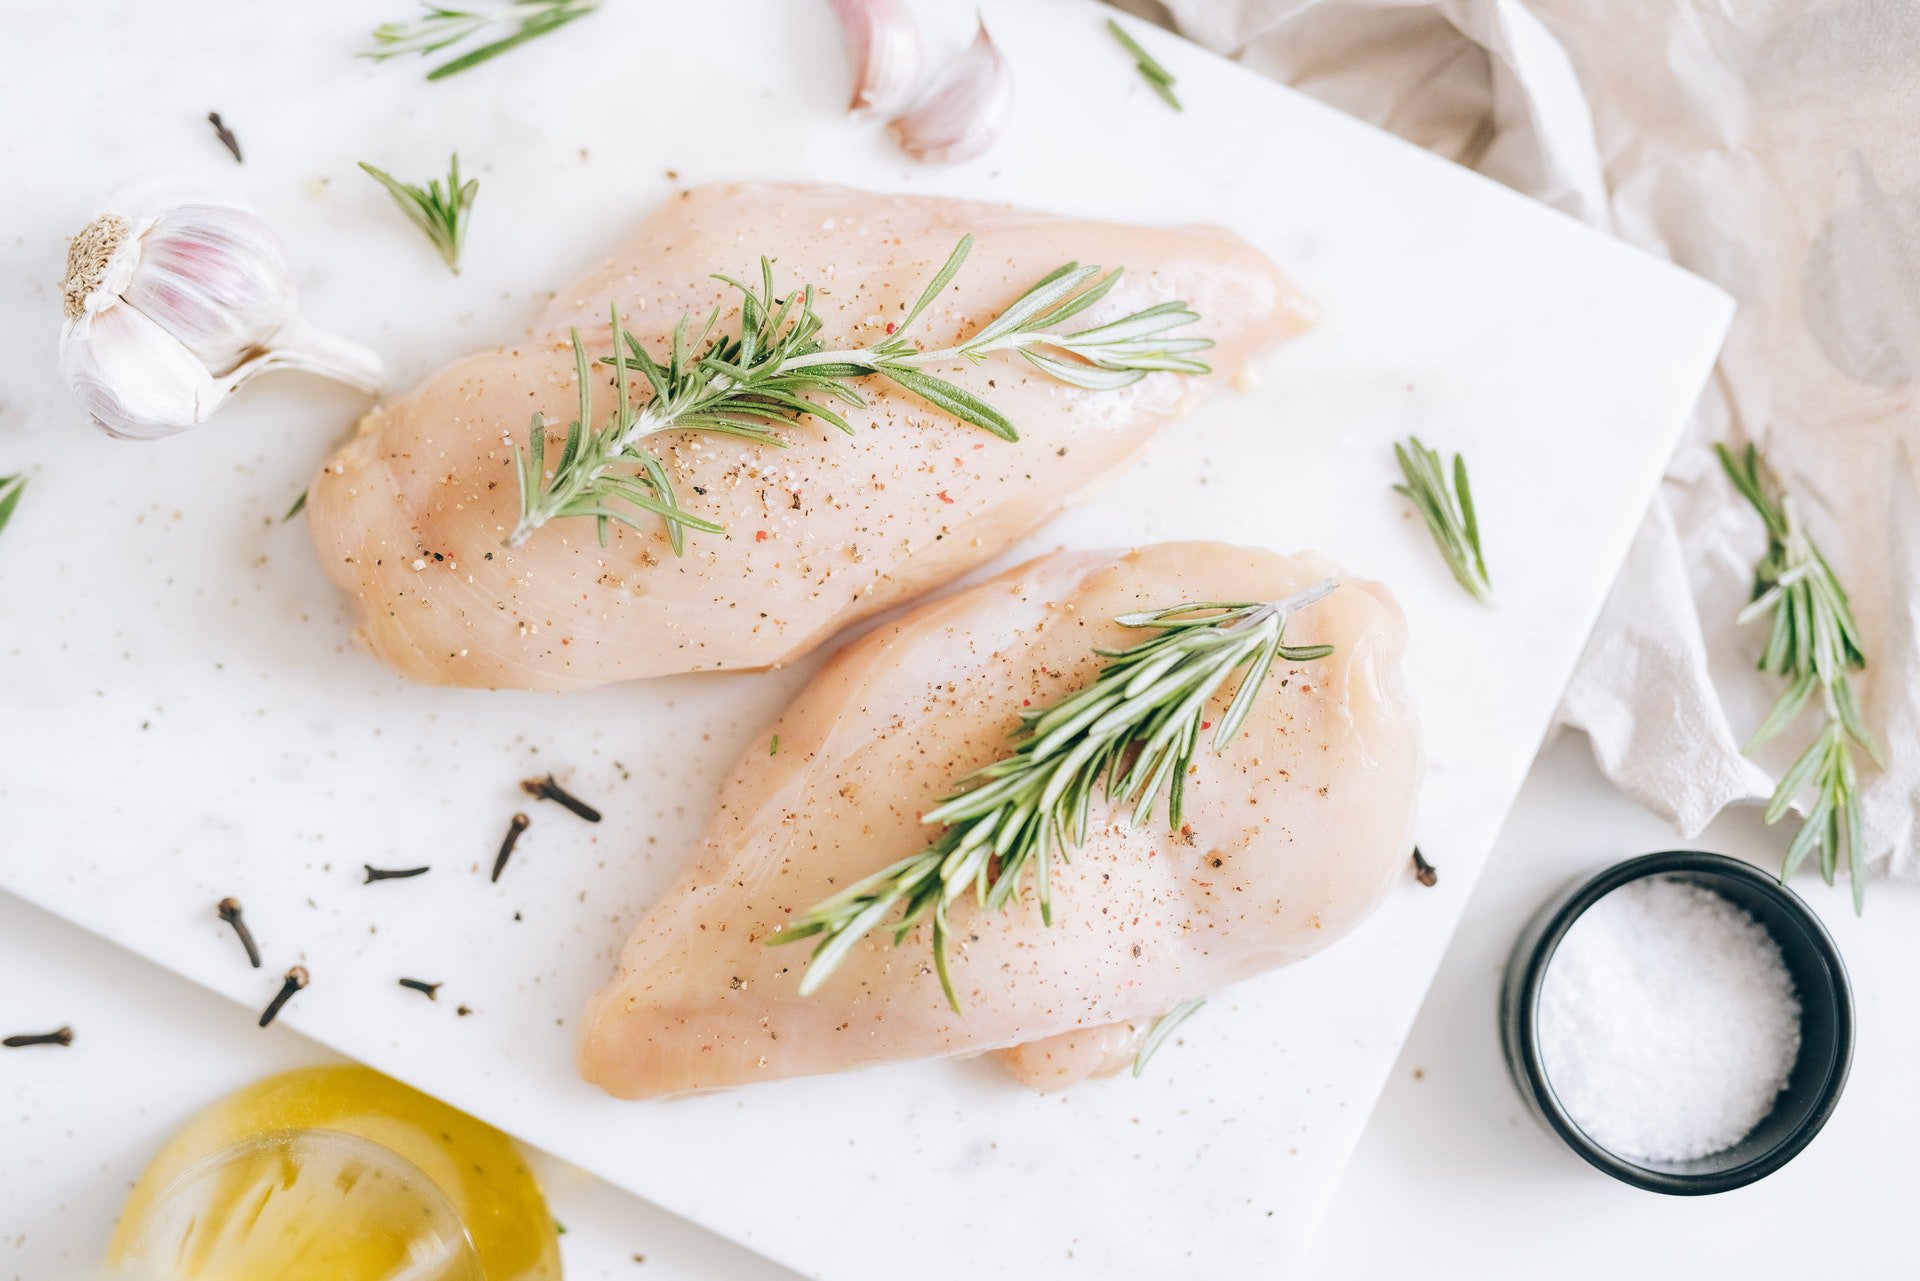 Chicken breast as a source of protein in the Mediterranean diet